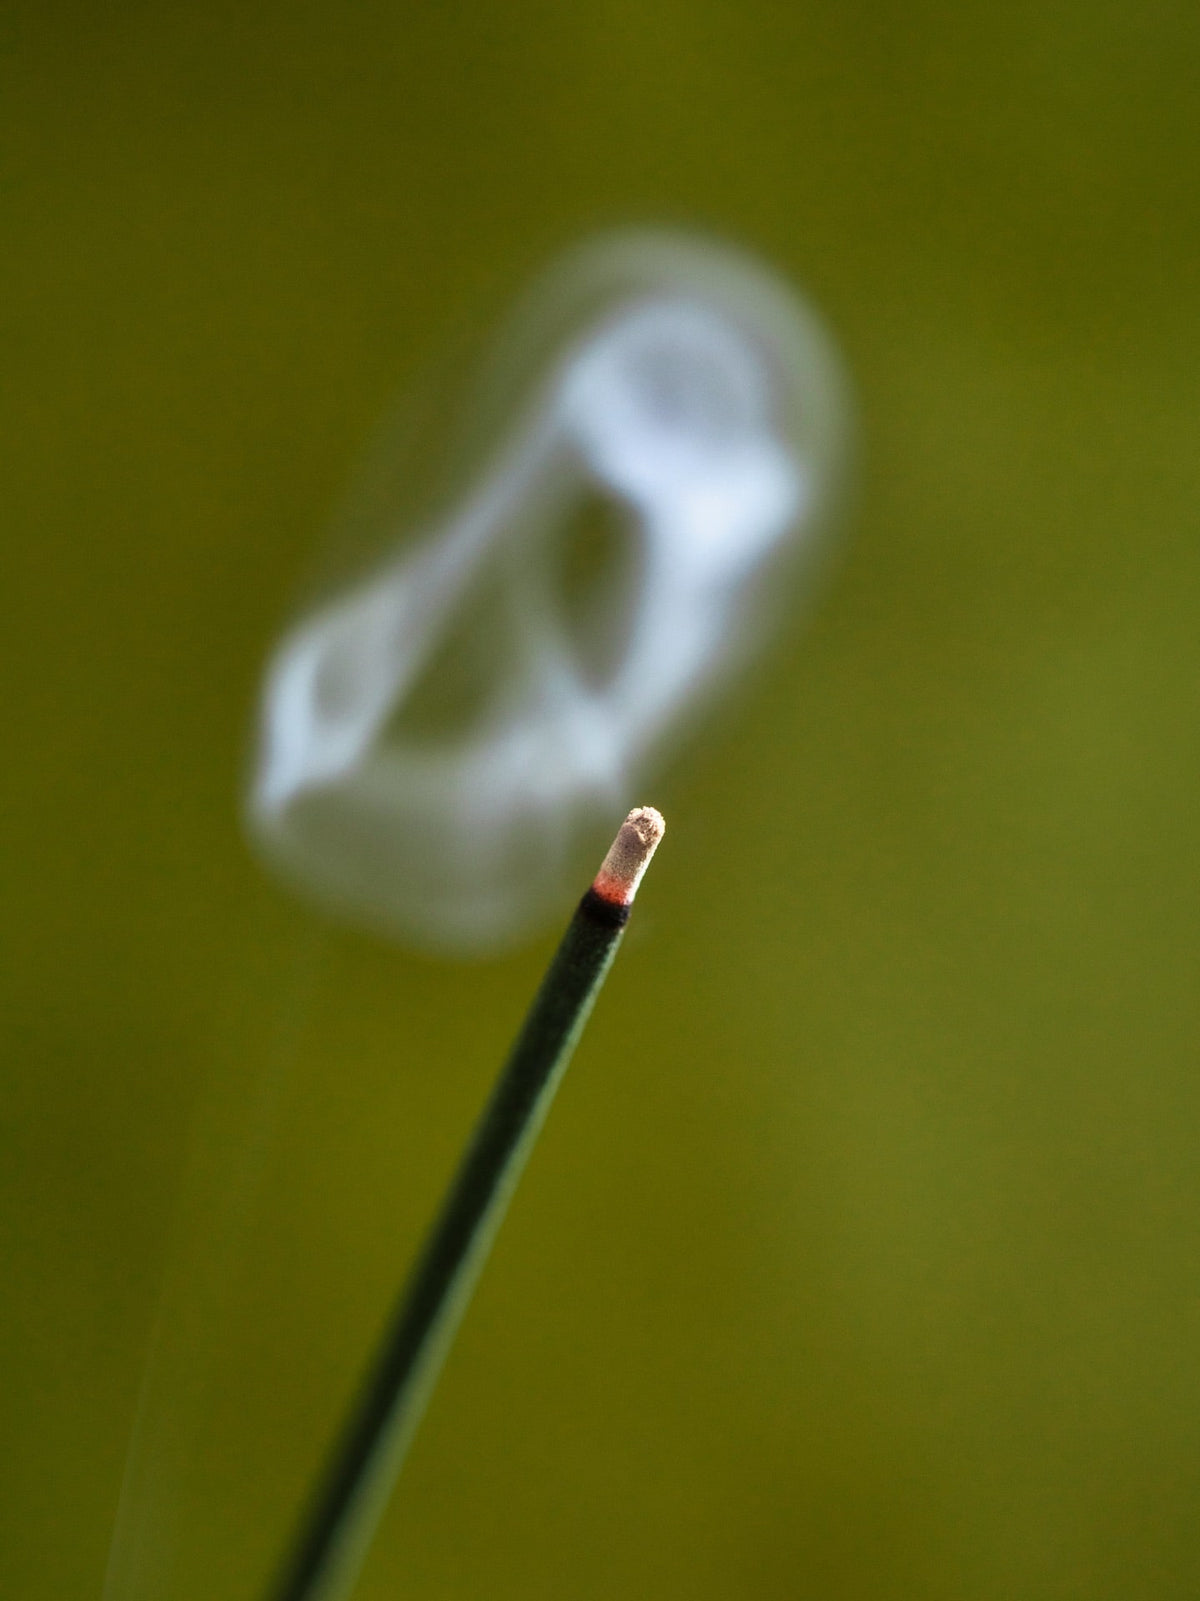 A Senko Cherry Blossom – Kyozakura incense stick with smoke coming out of it.